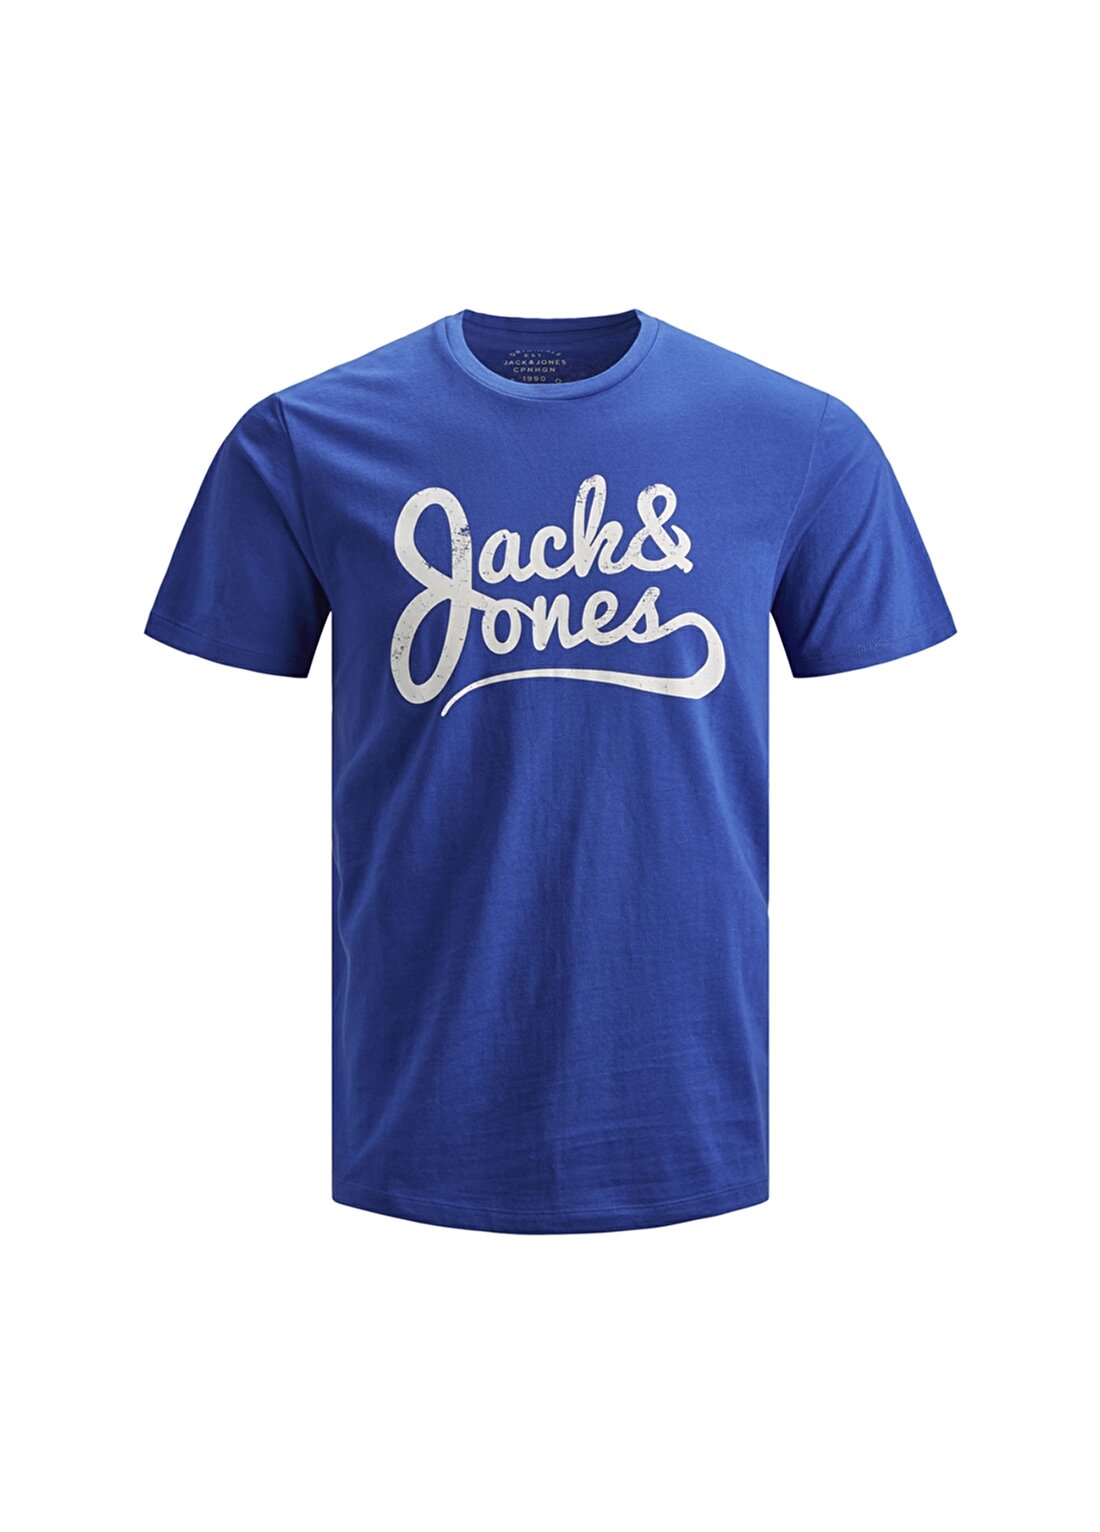 Jack & Jones Traffic T-Shirt